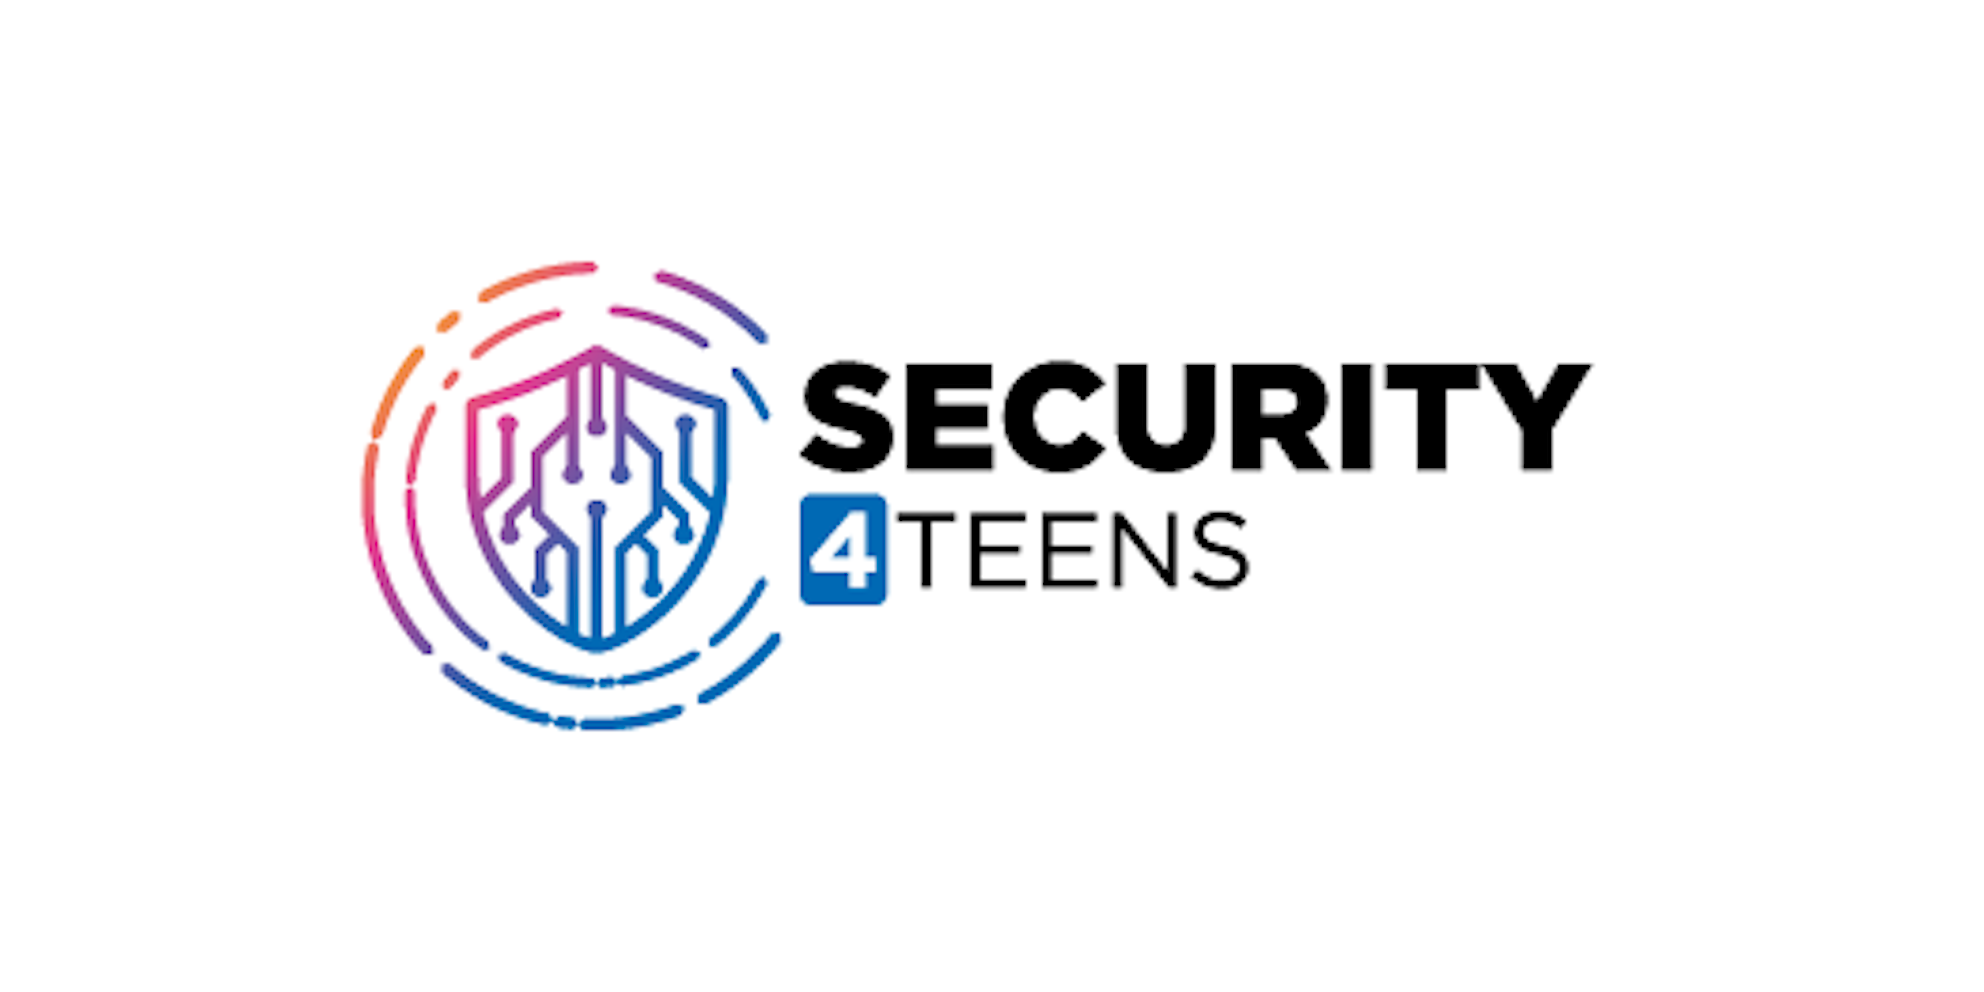 Security4teens logo 111991558679